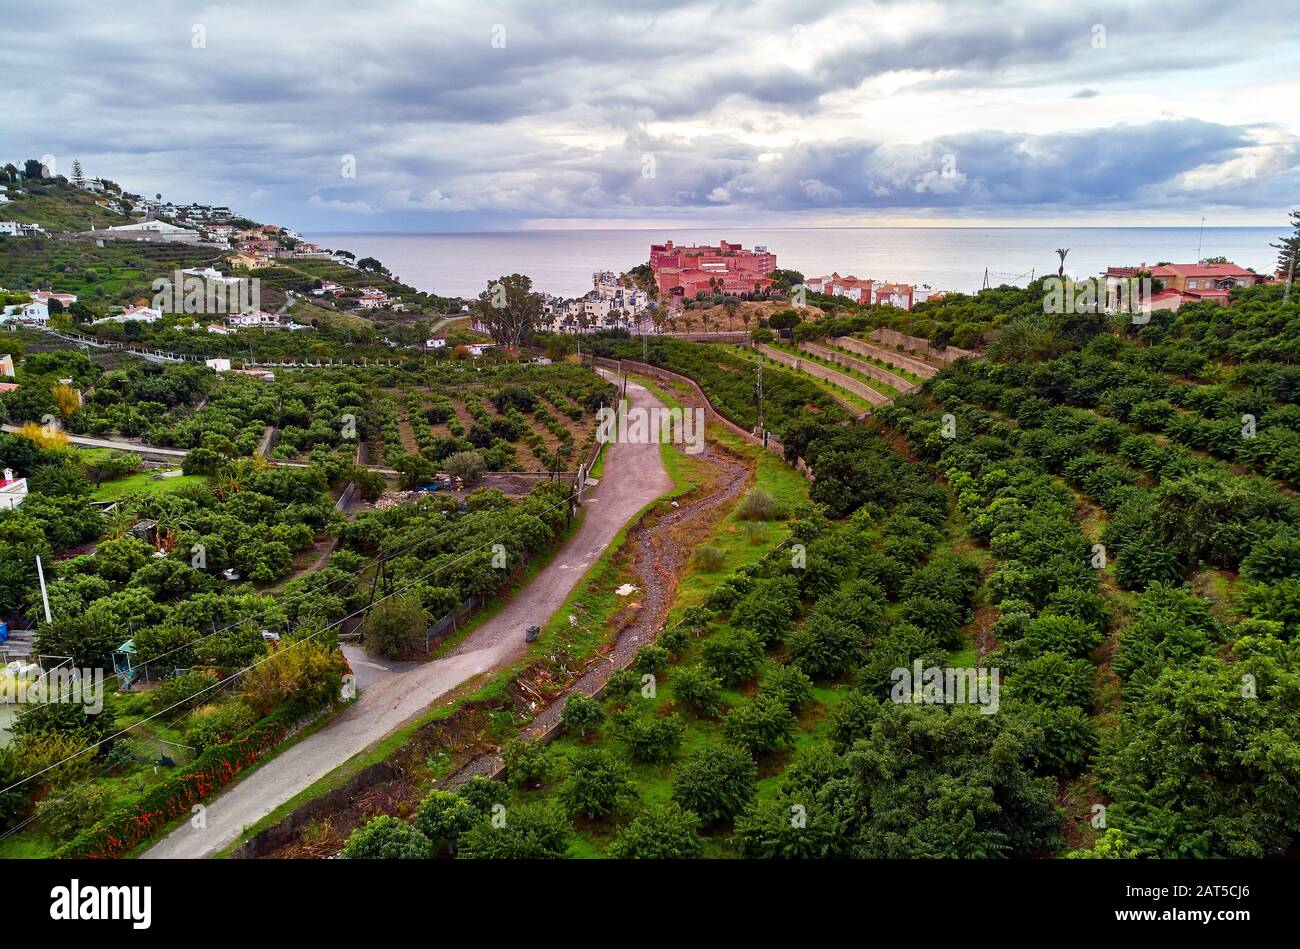 Luftbild der Stadt am Hang am Meer, Drone Almuñécar. Malerische Hügel, Täler, landwirtschaftliche Landschaft. Moody bewölkt Himmel über Meer Spanien Stockfoto